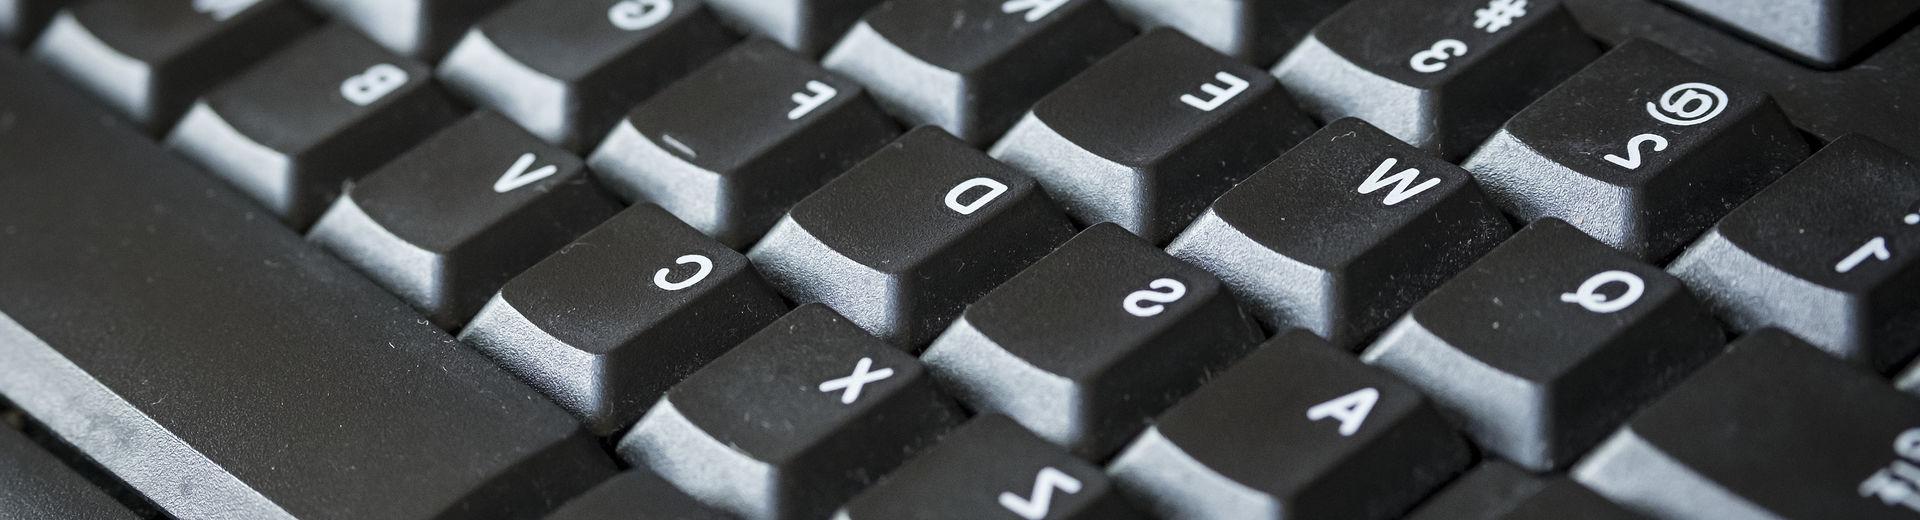 A close-up black computer keyboard.